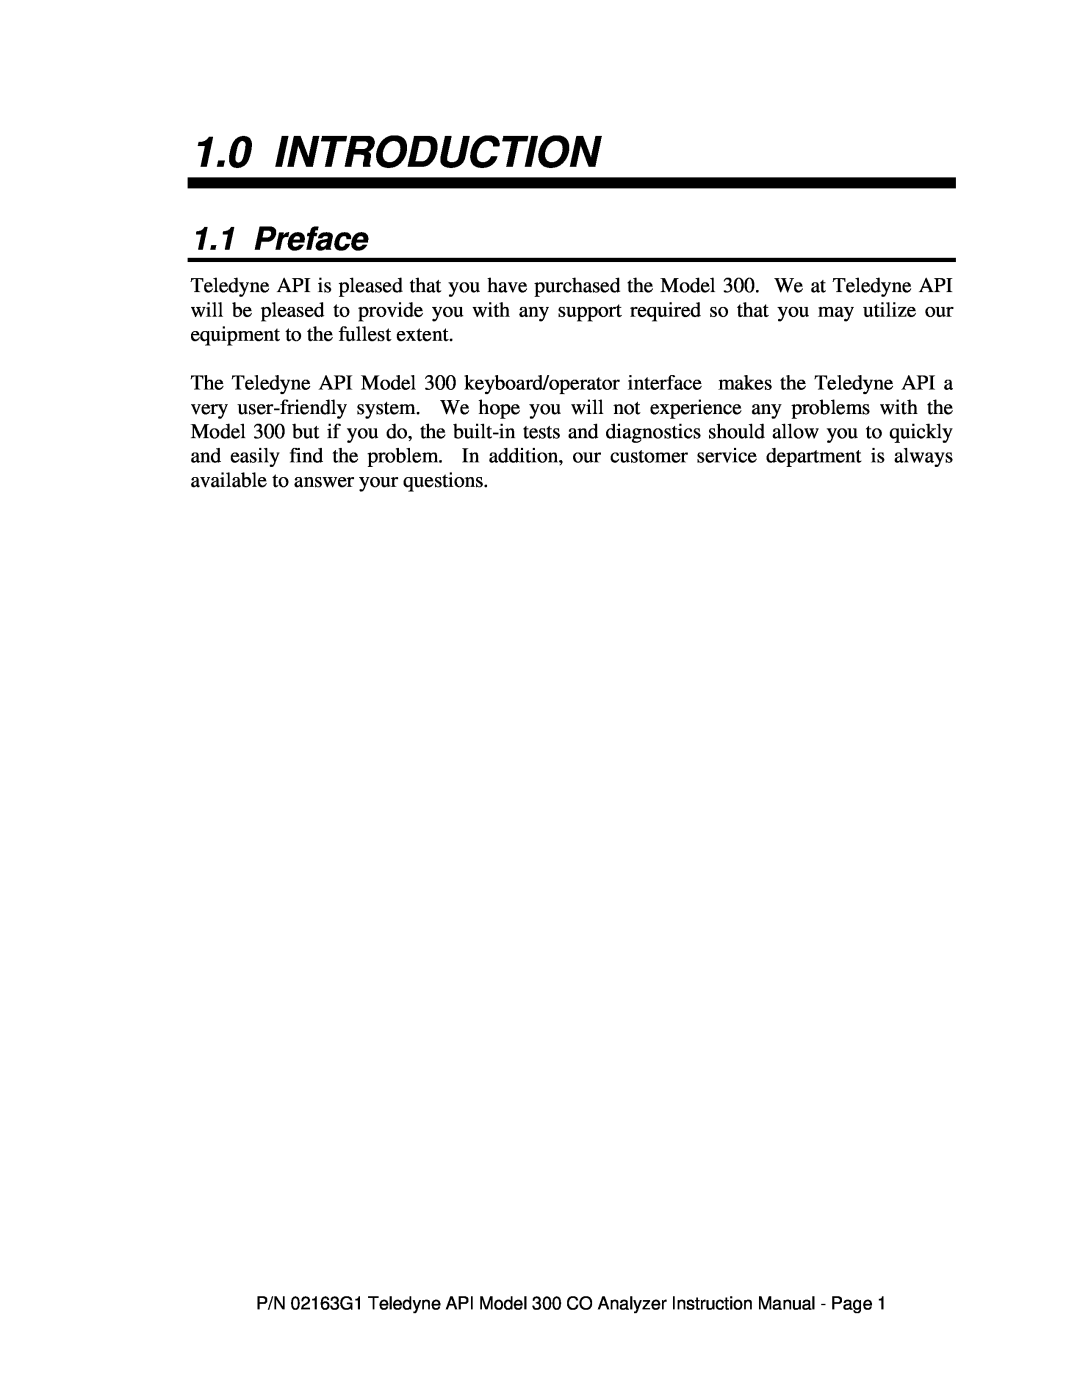 Teledyne 300 instruction manual 1.0INTRODUCTION, 1.1Preface 